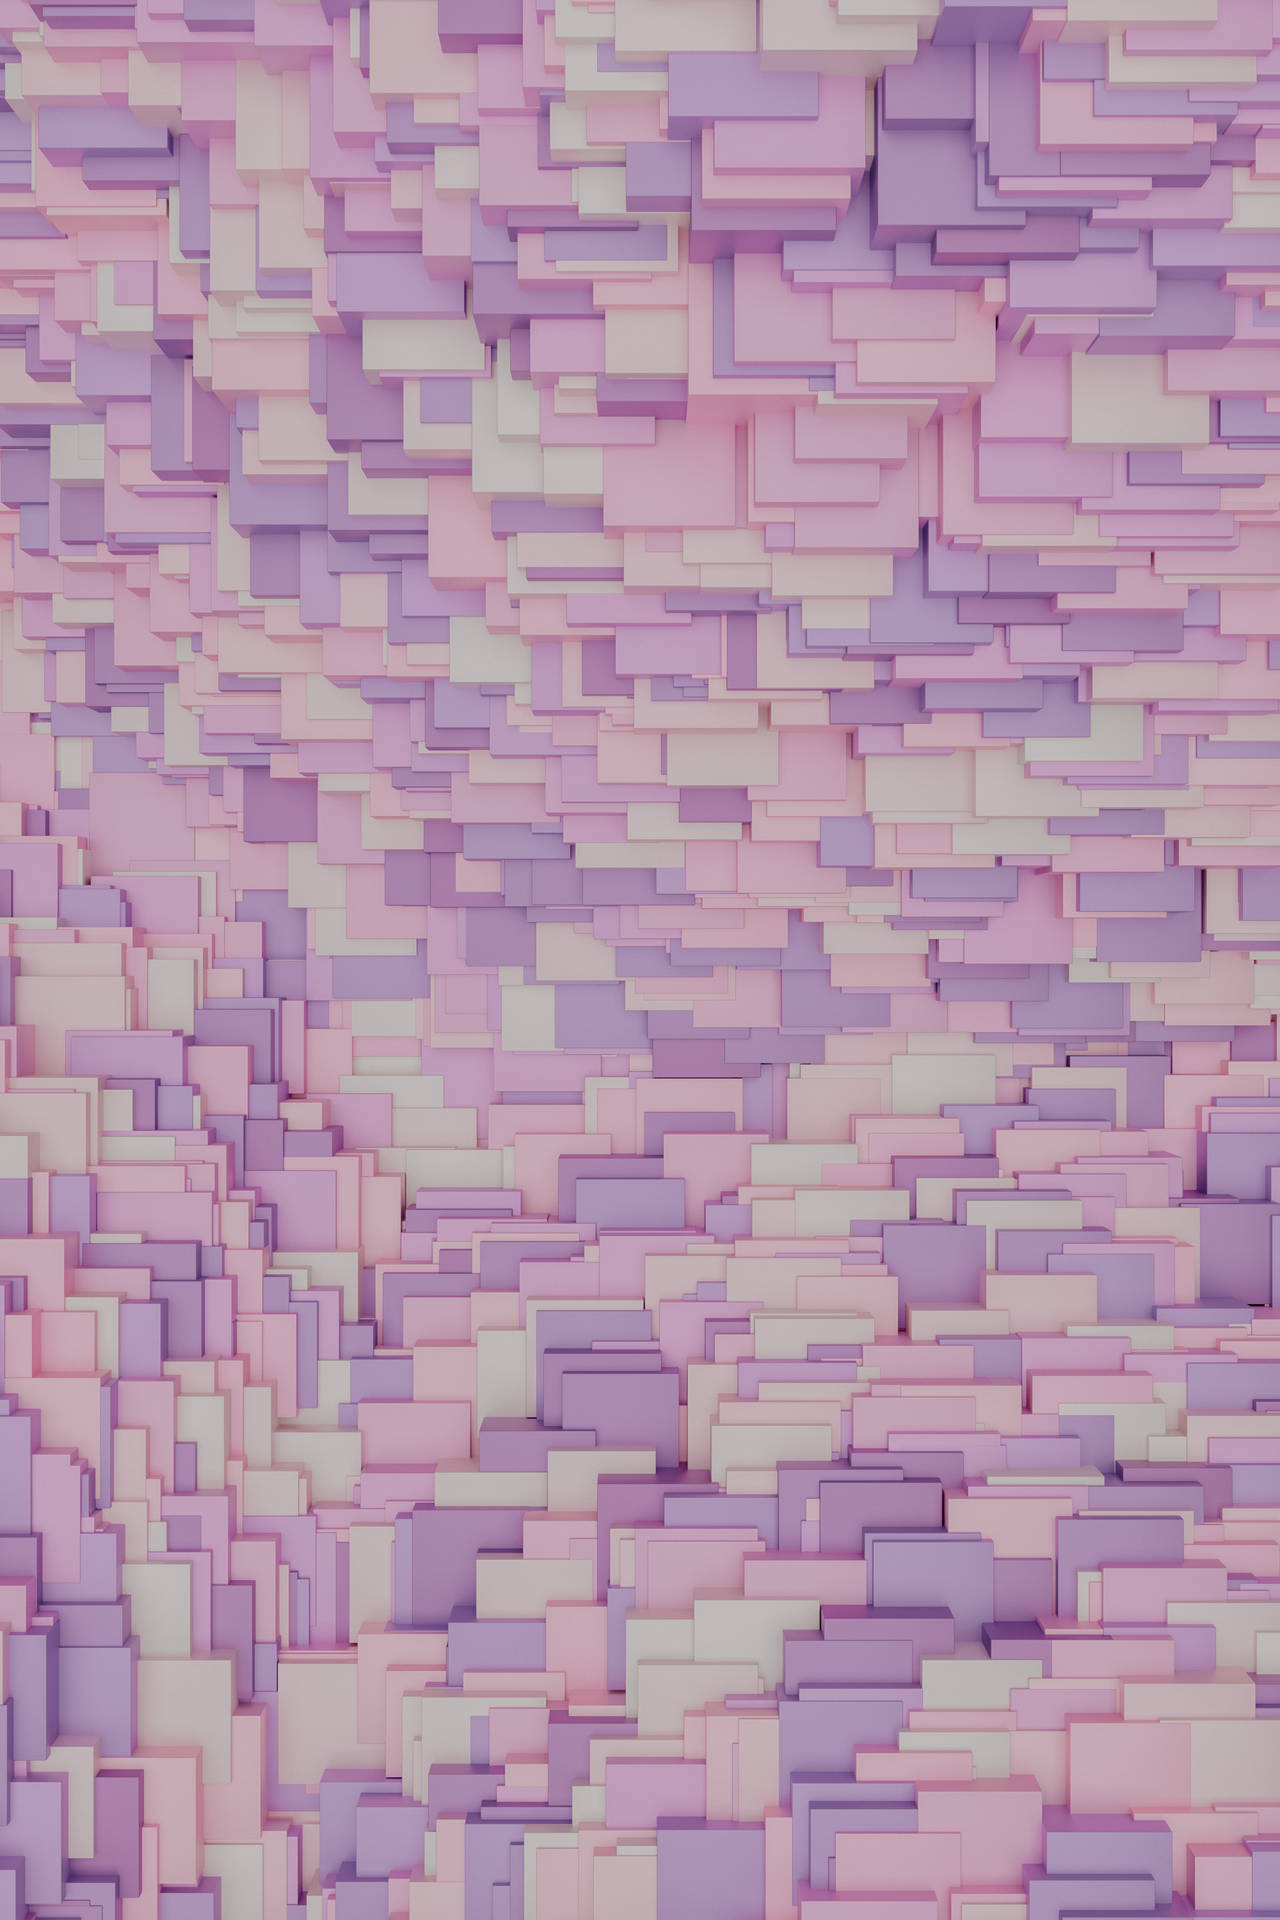 Lavender Aesthetic 3d Blocks Texture Background